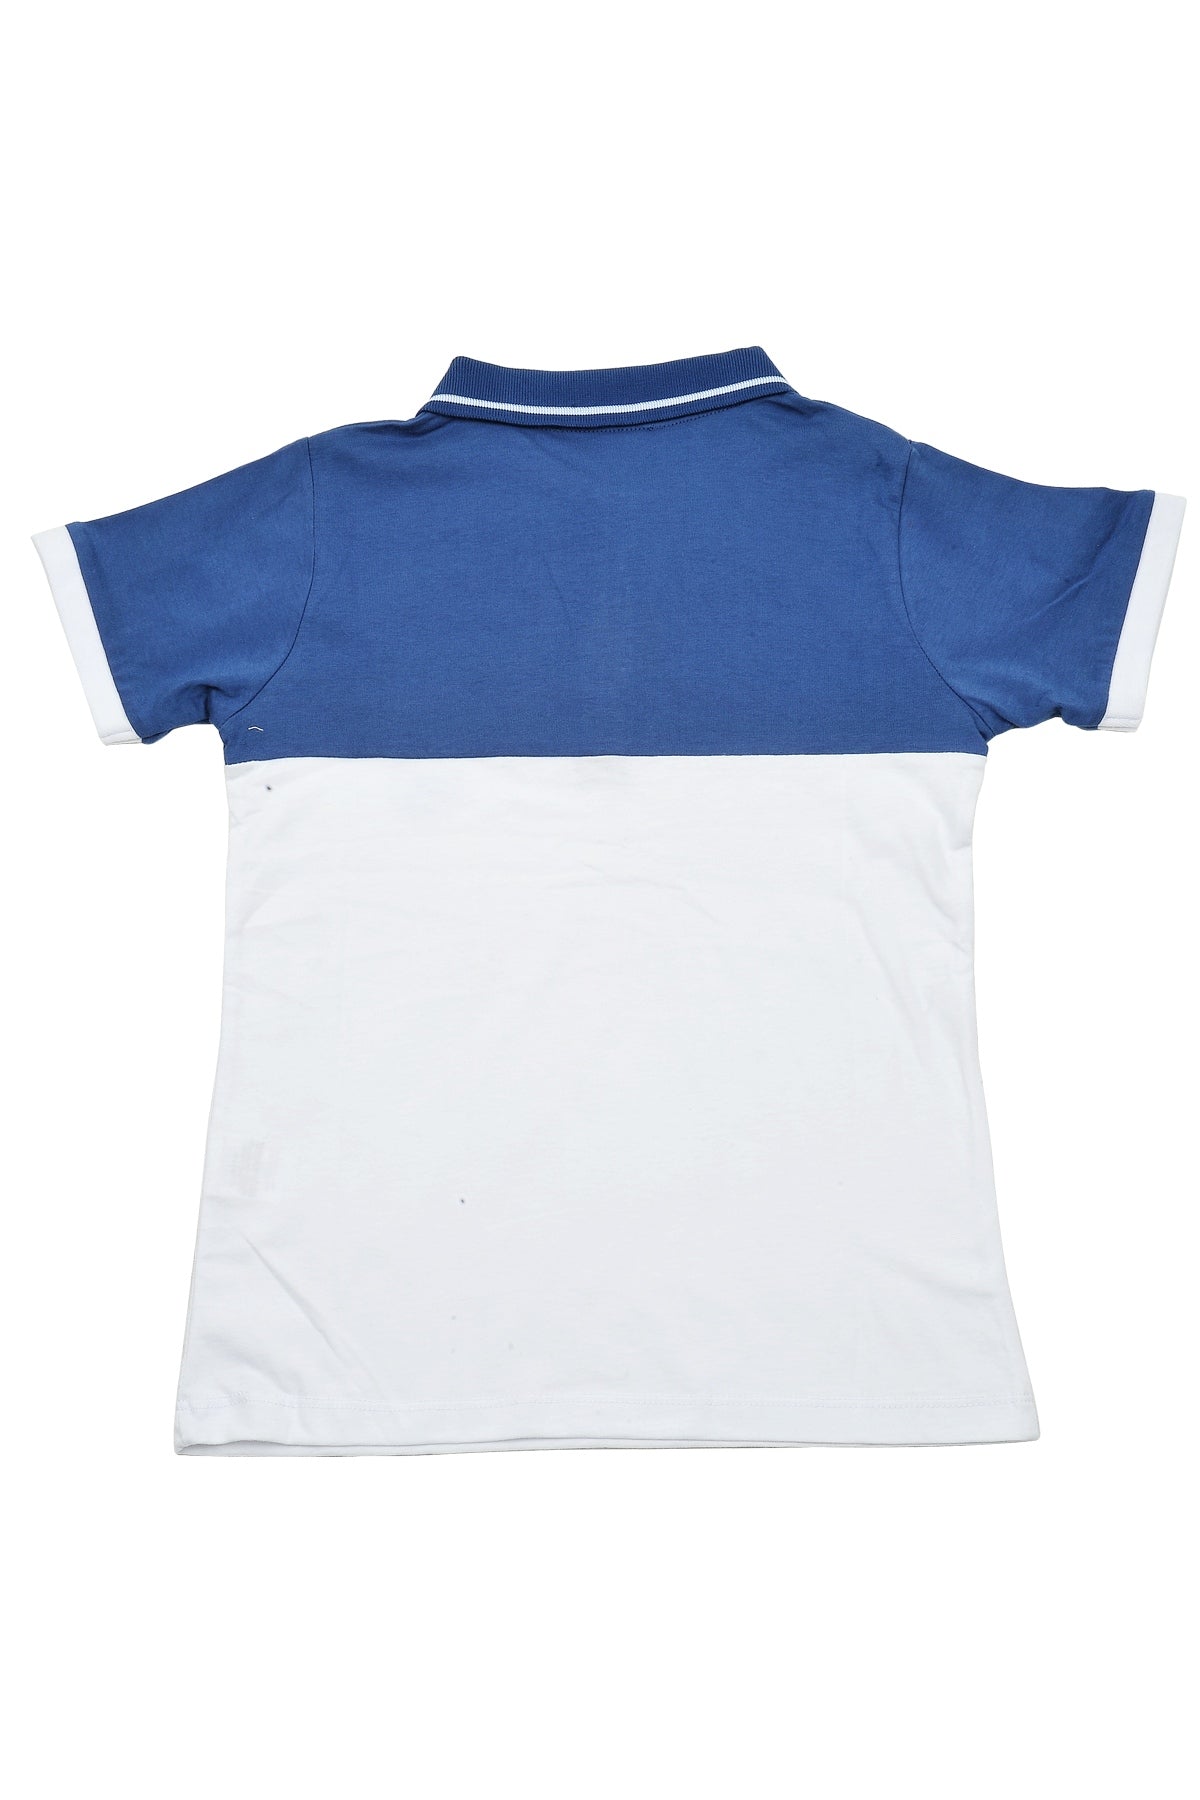 Erkek Çocuk Mavi Renk Bloklu Polo Yaka T-Shirt (5-14yaş)-3